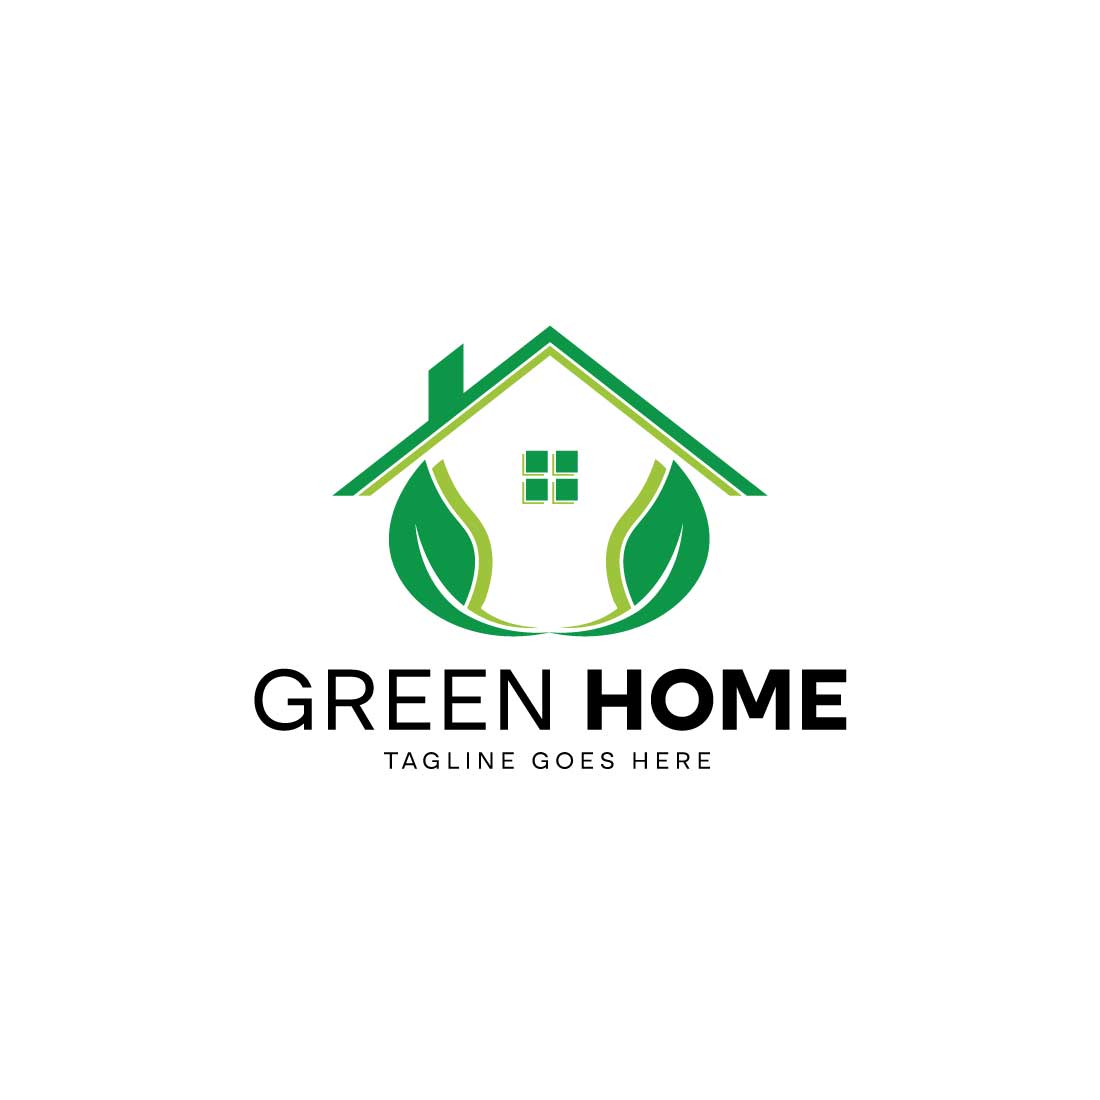 Minimalist Green Home Logo design cover image.